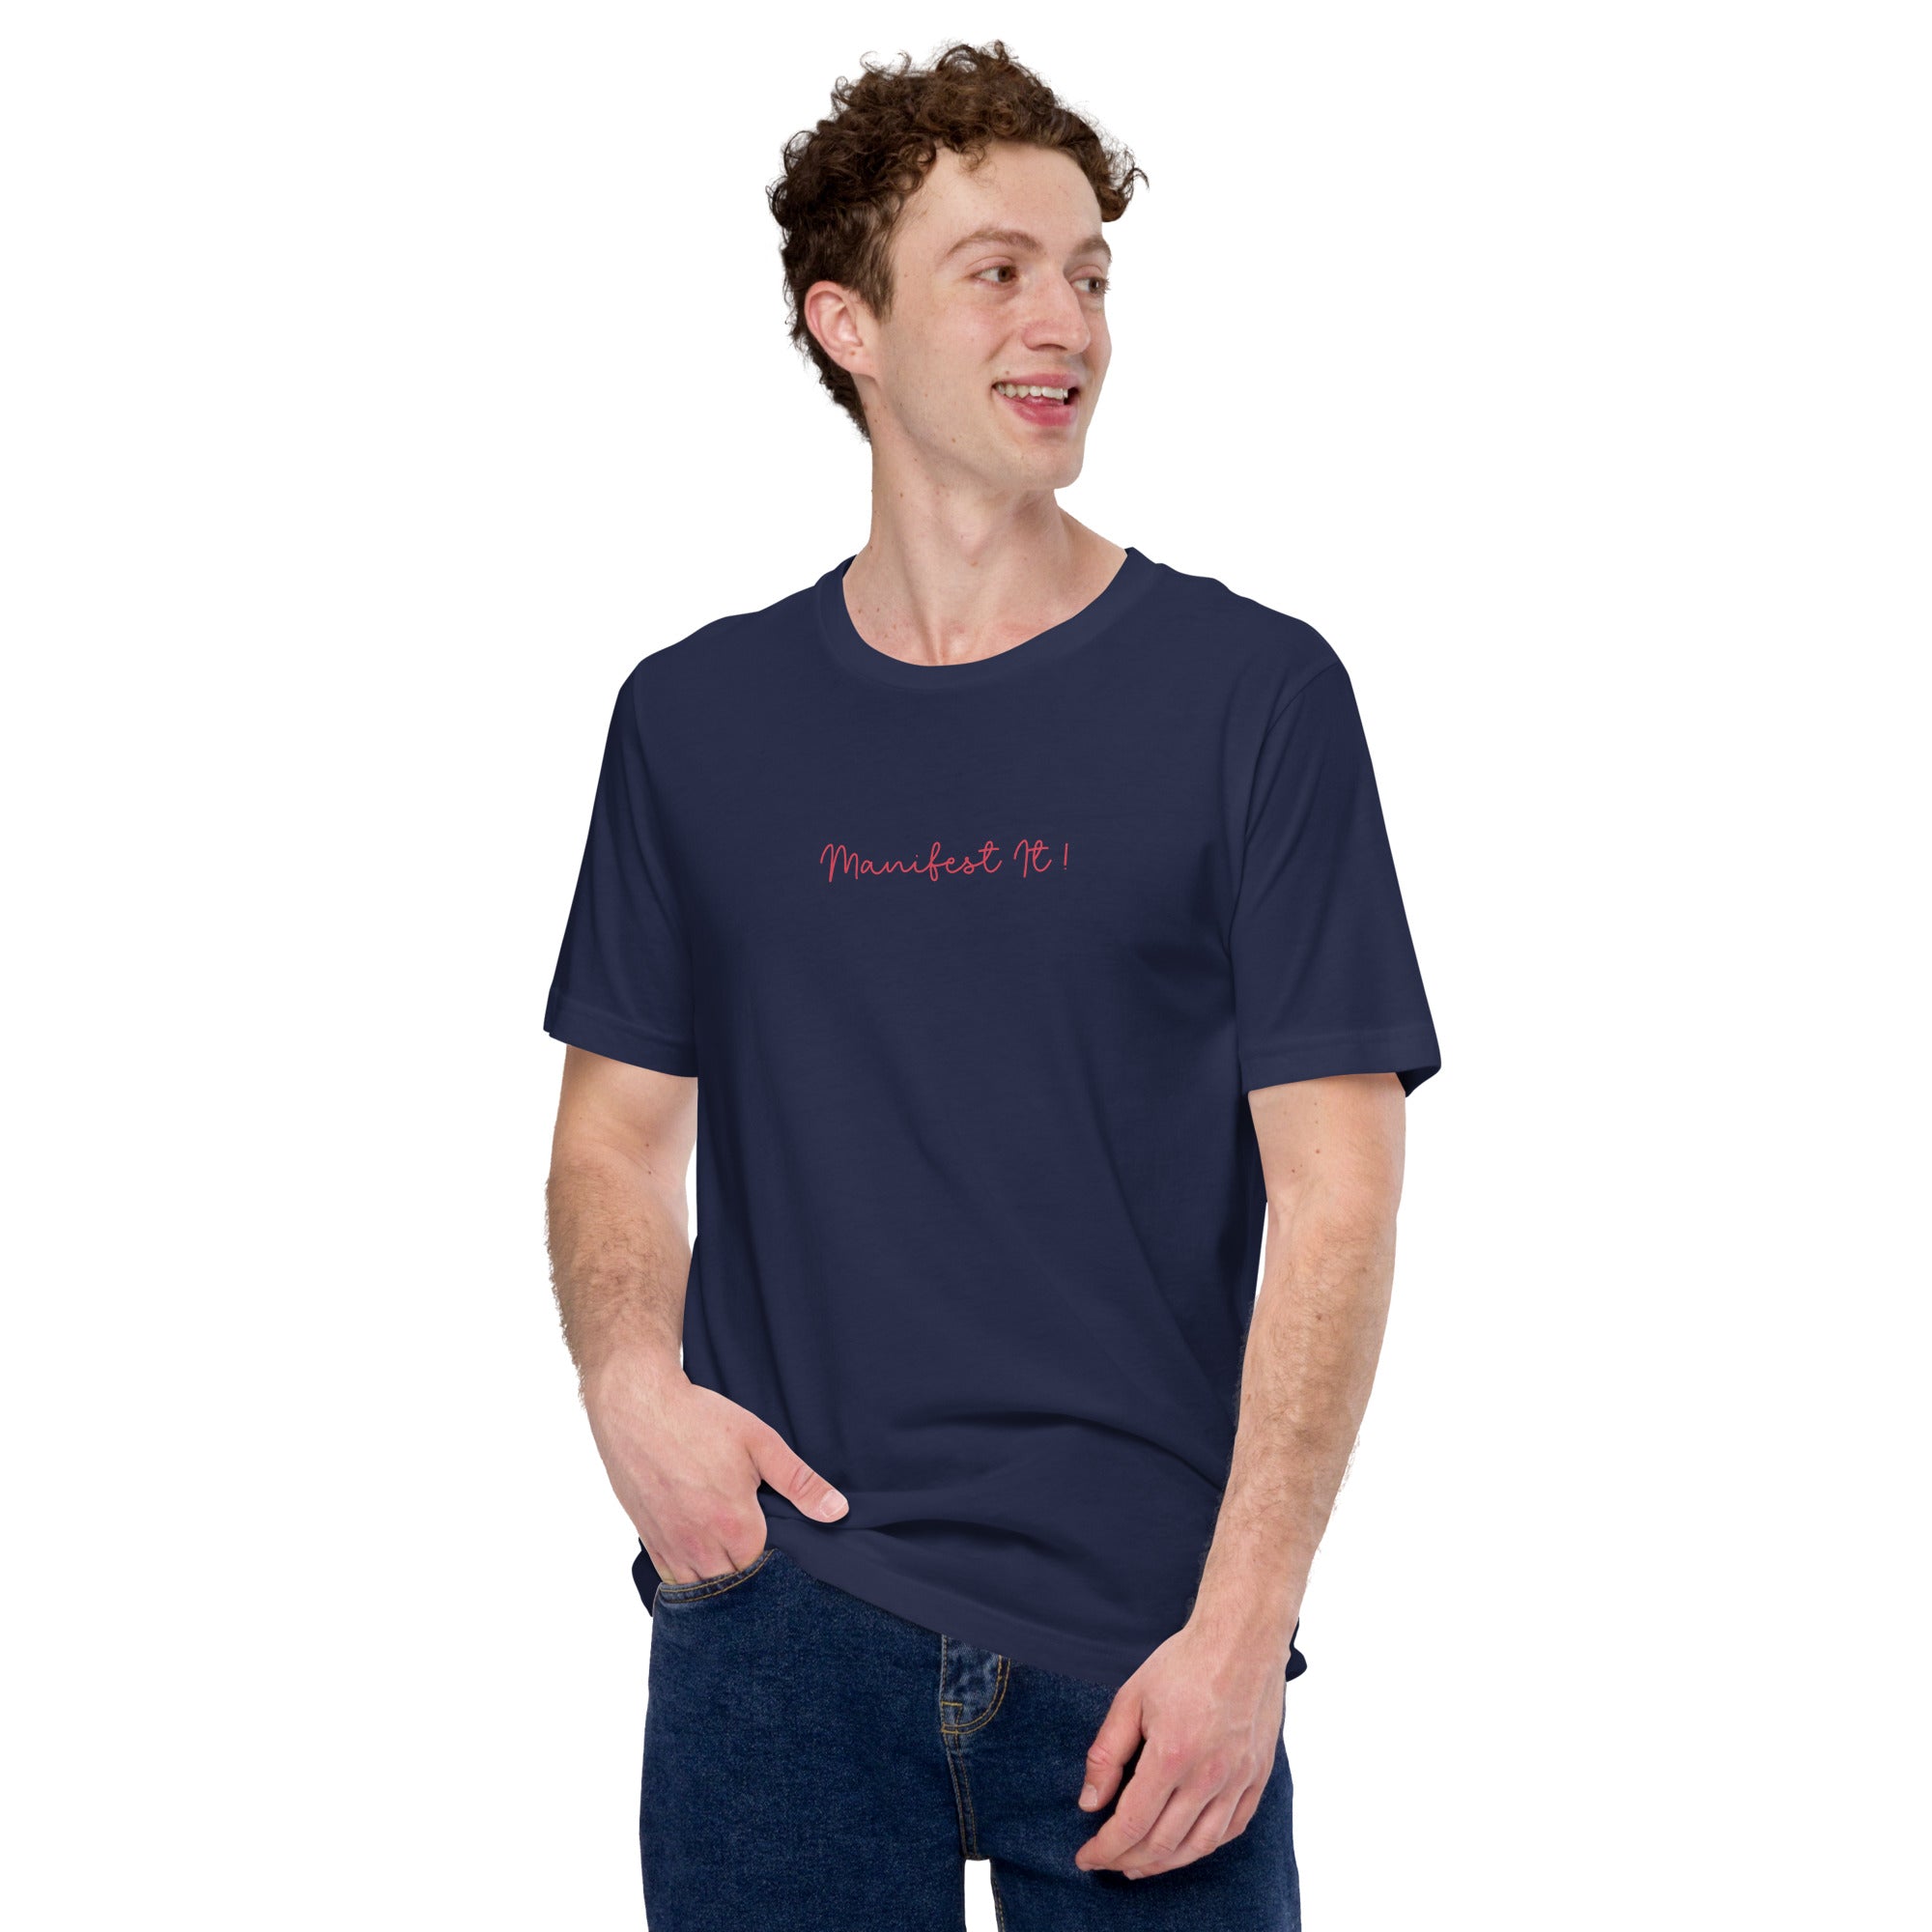 Manifest It - Unisex t-shirt | Positive Affirmation Tee